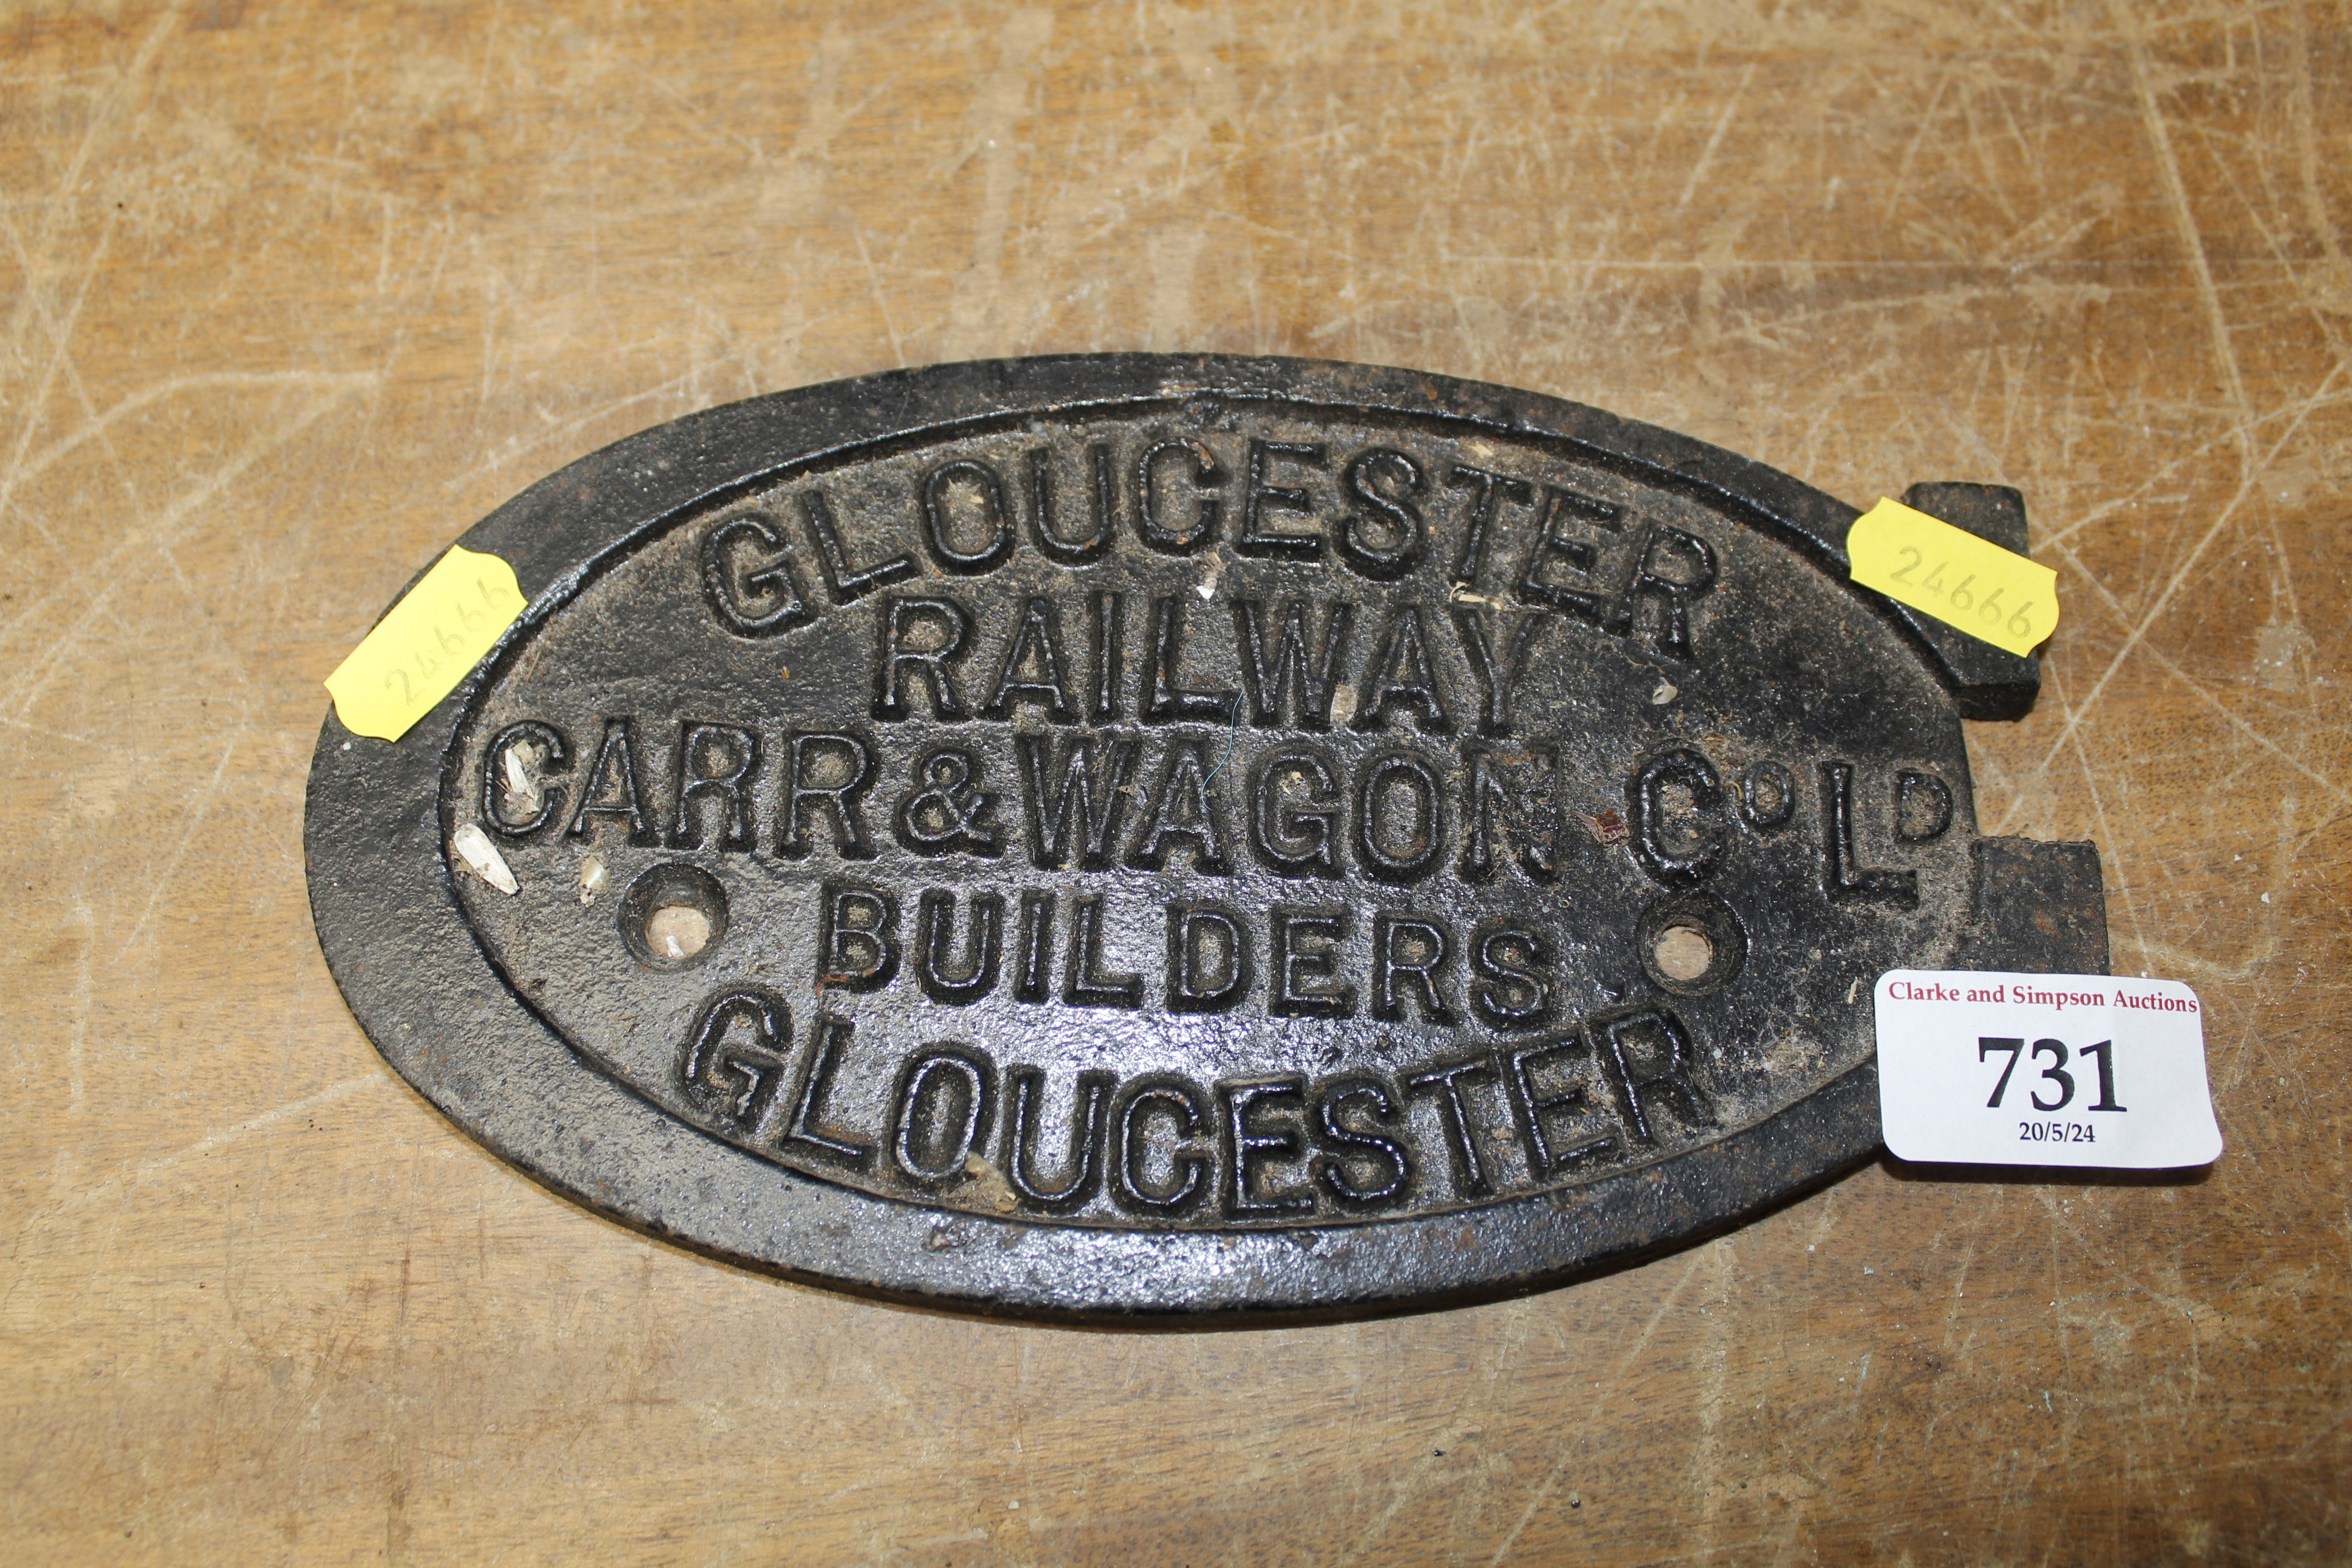 A cast iron Gloucester Railway Car and Wagon Co. L